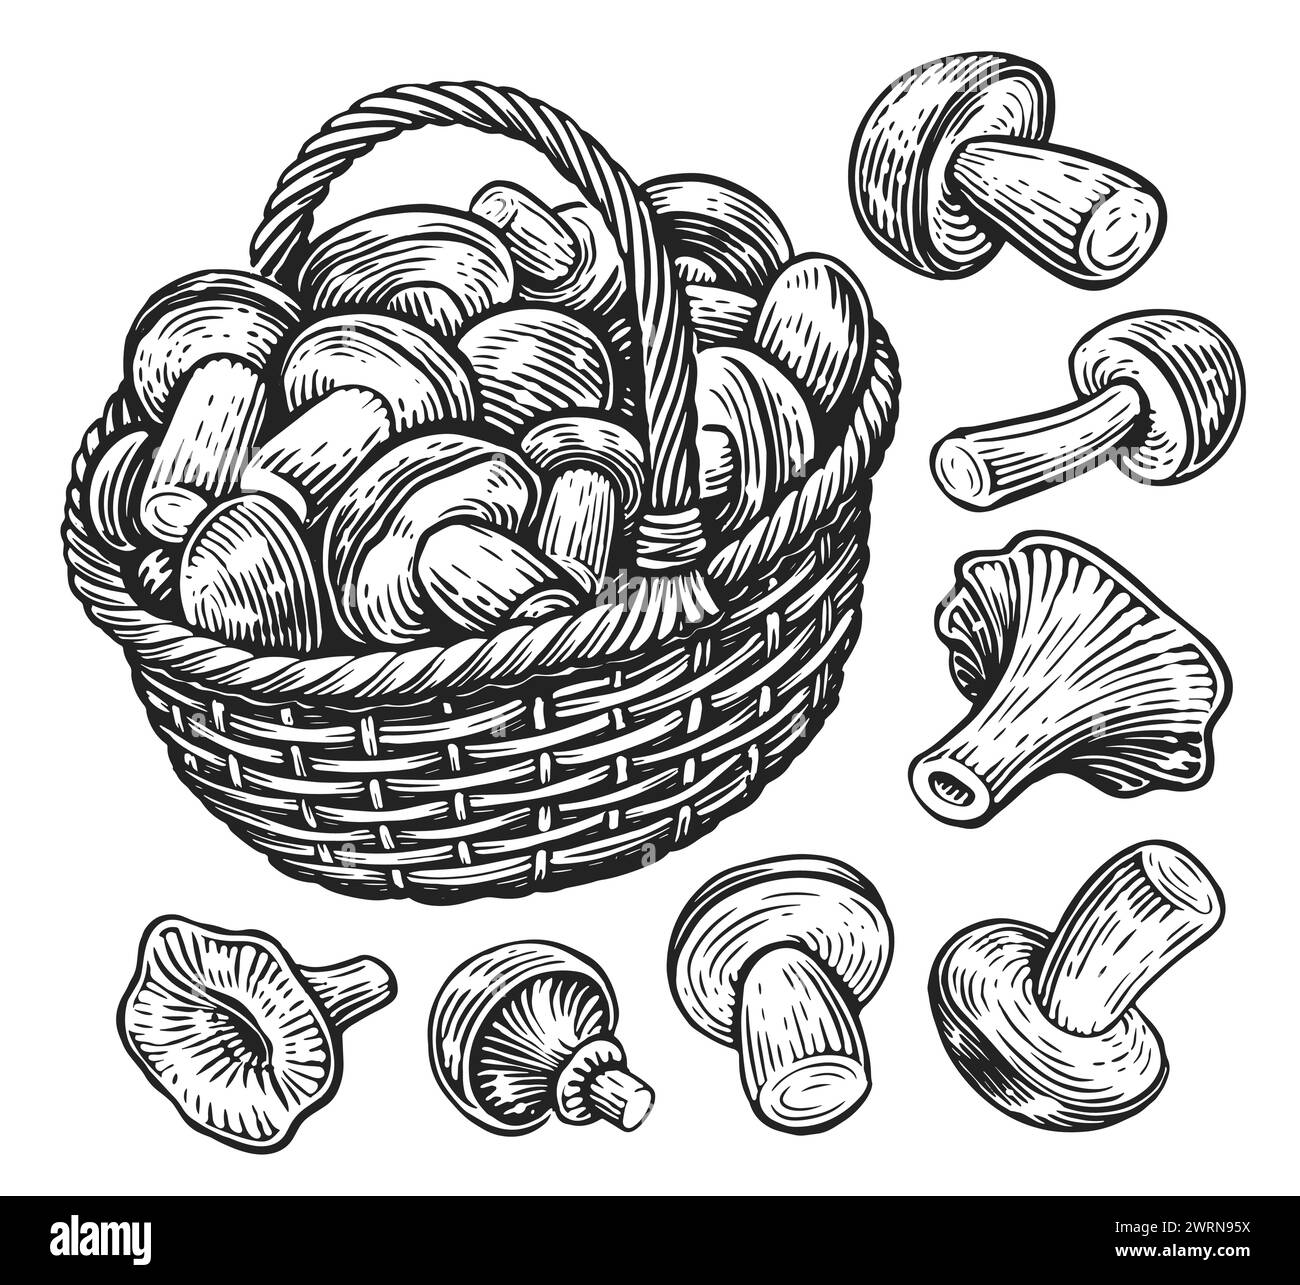 Handgezogener Korb voller Pilze. Frische Bio-Lebensmittel. Skizzieren Sie Vintage-Vektor-Illustration Stock Vektor